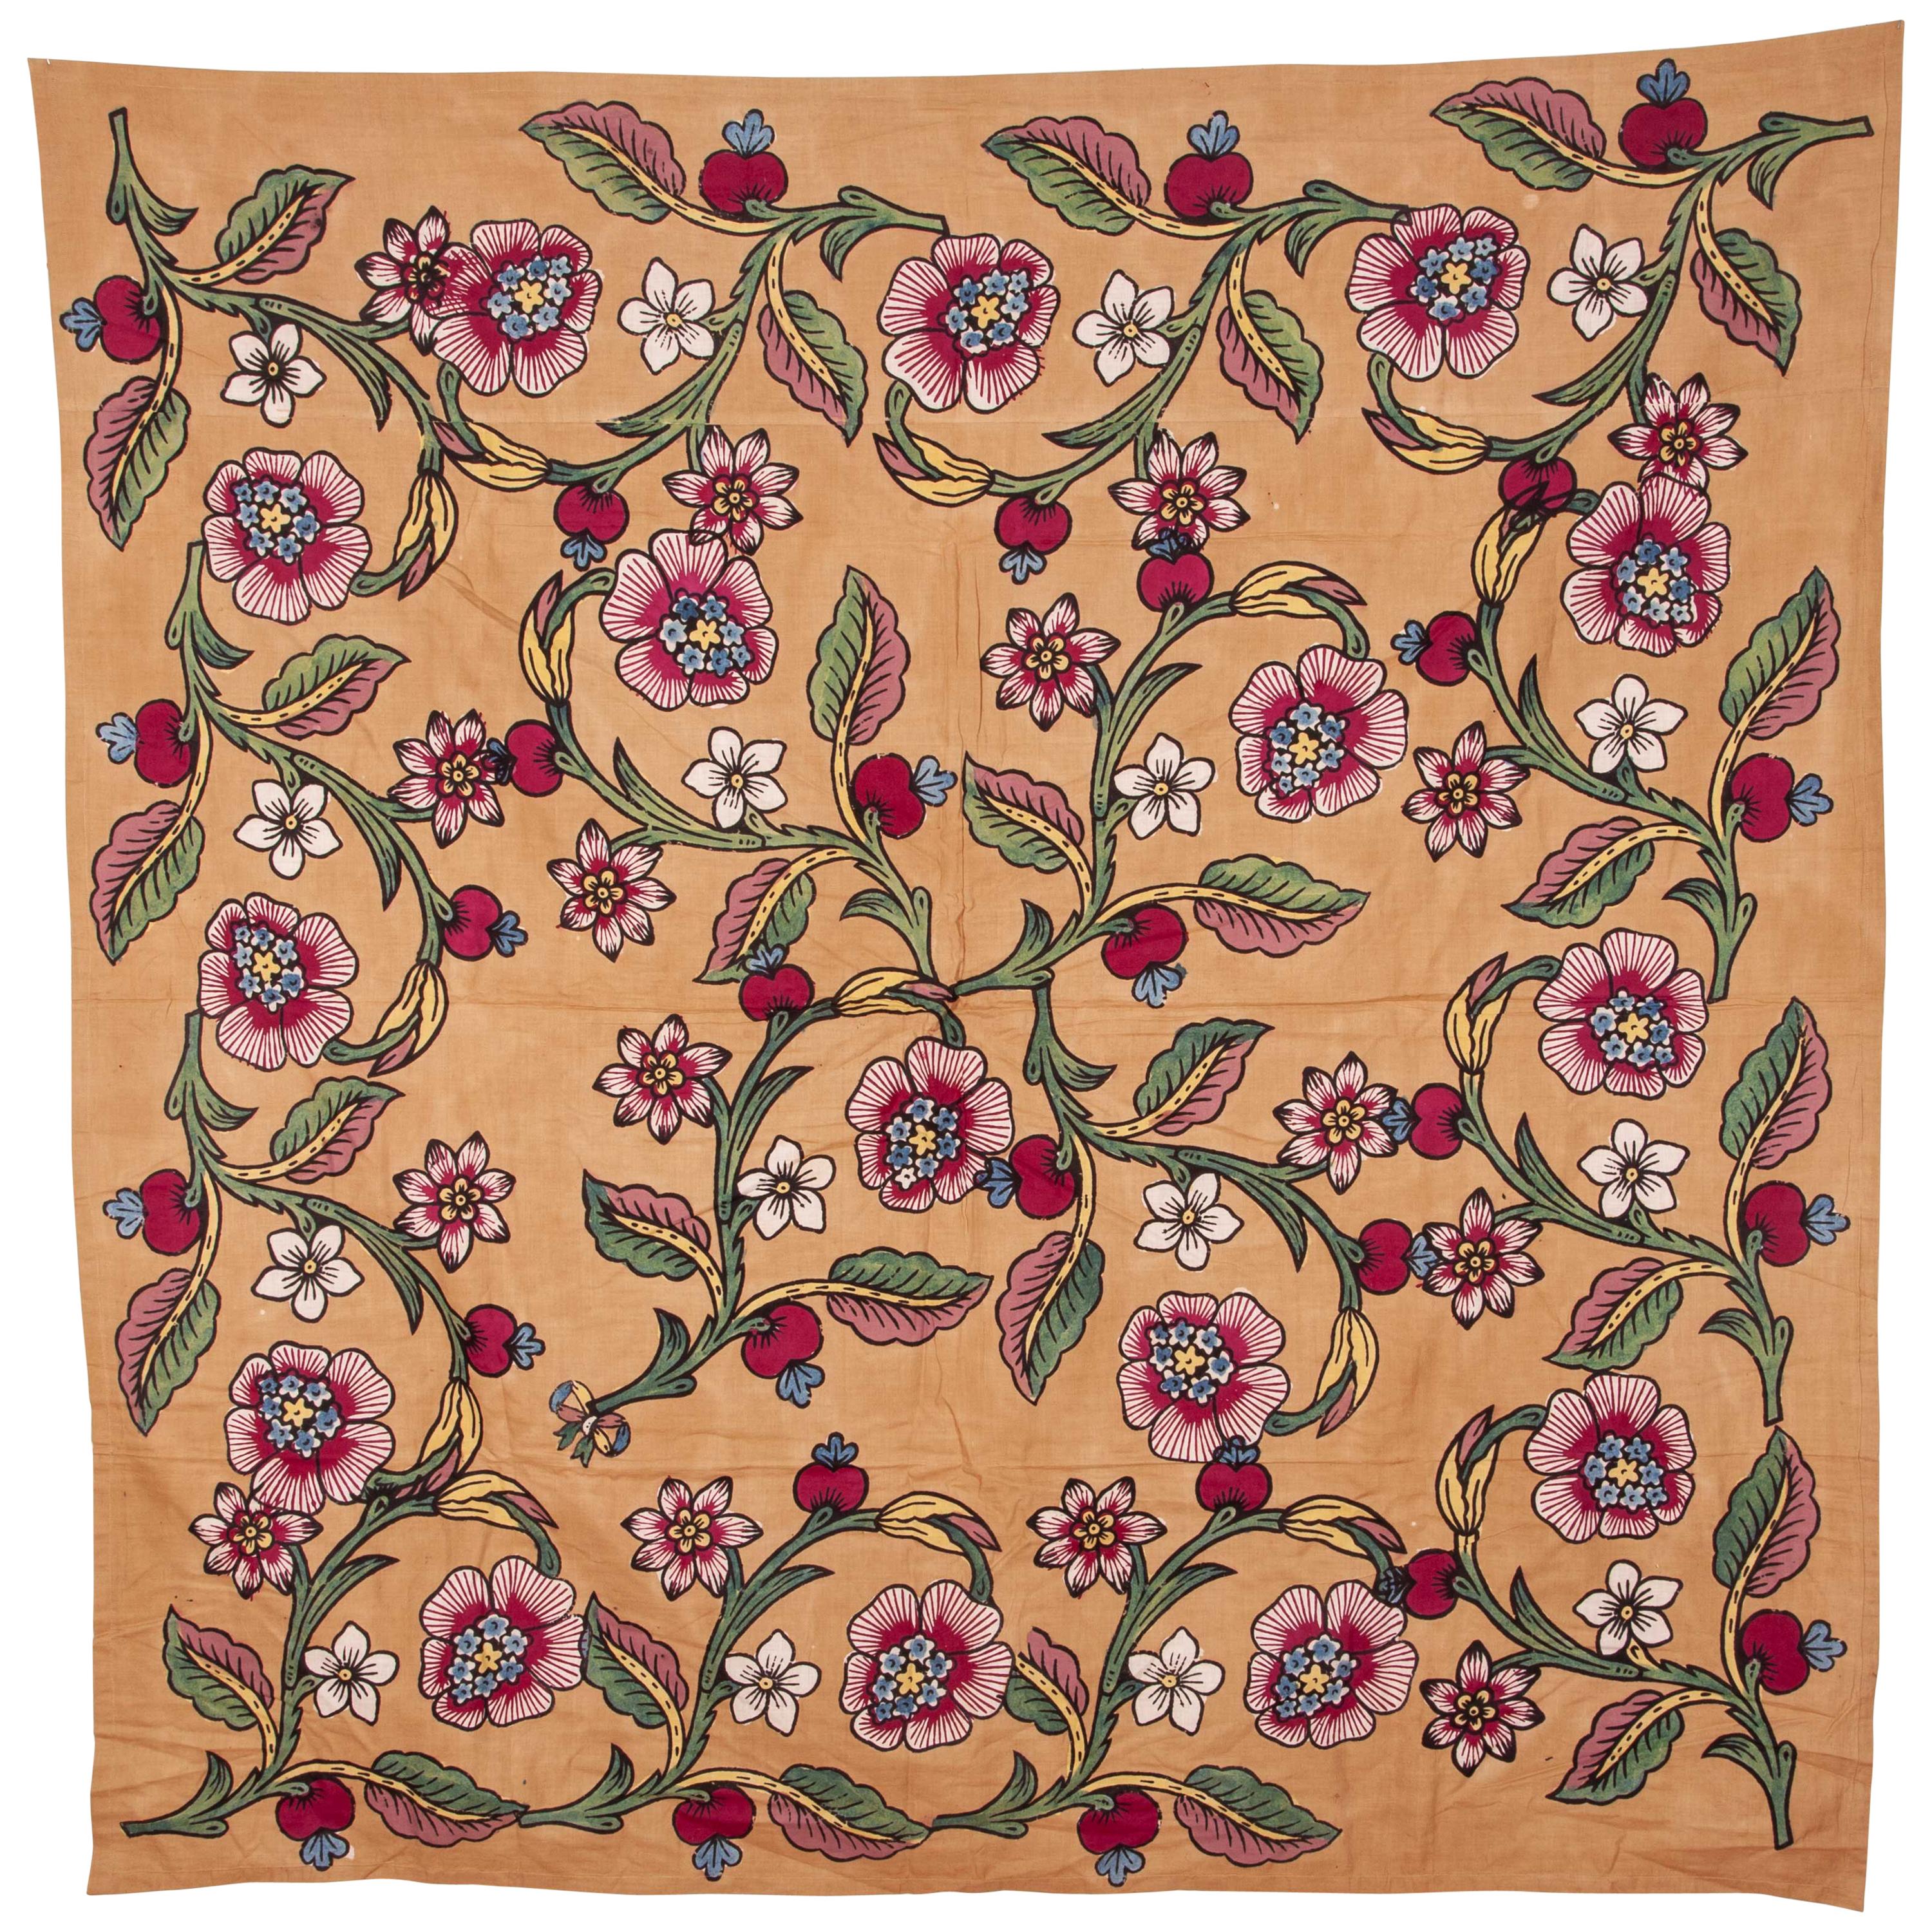 Anatolian Turkish Folk Art Block Printed and Painted Bokhce ‘Wrapping Cloth’